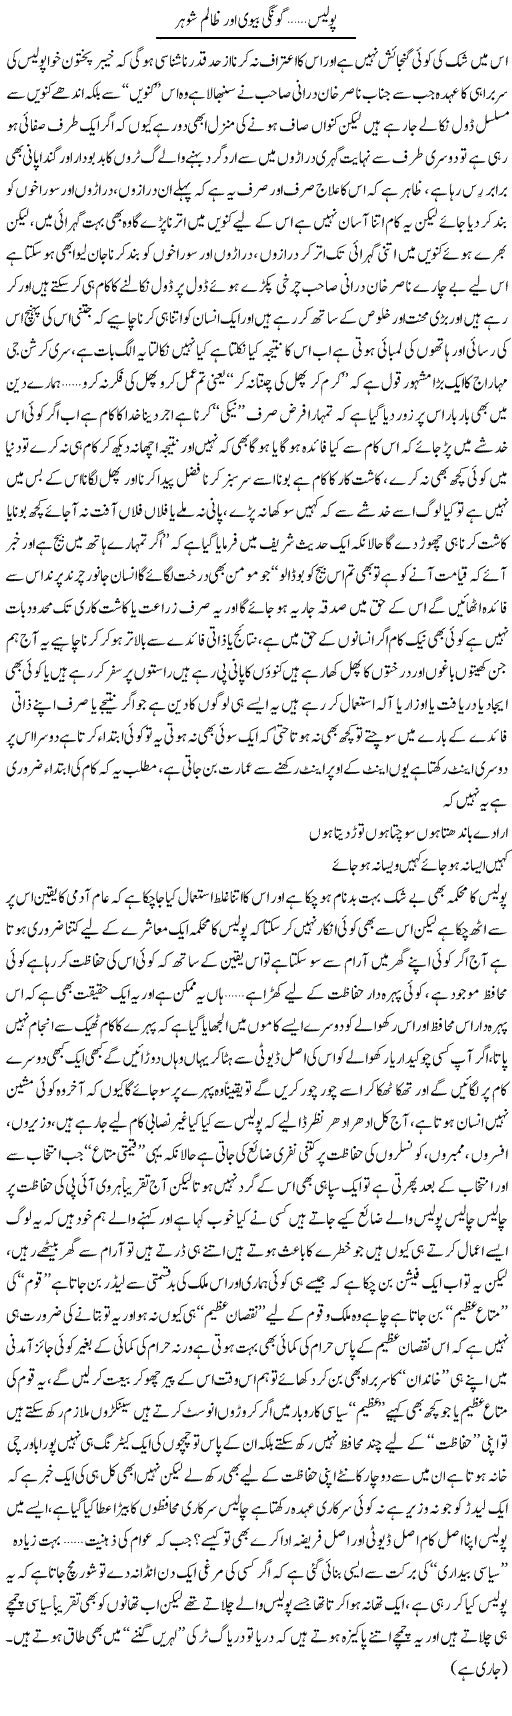 Police, Goongi Biwi Aur Zalim Shohar | Saad Ullah Jan Barq | Daily Urdu Columns